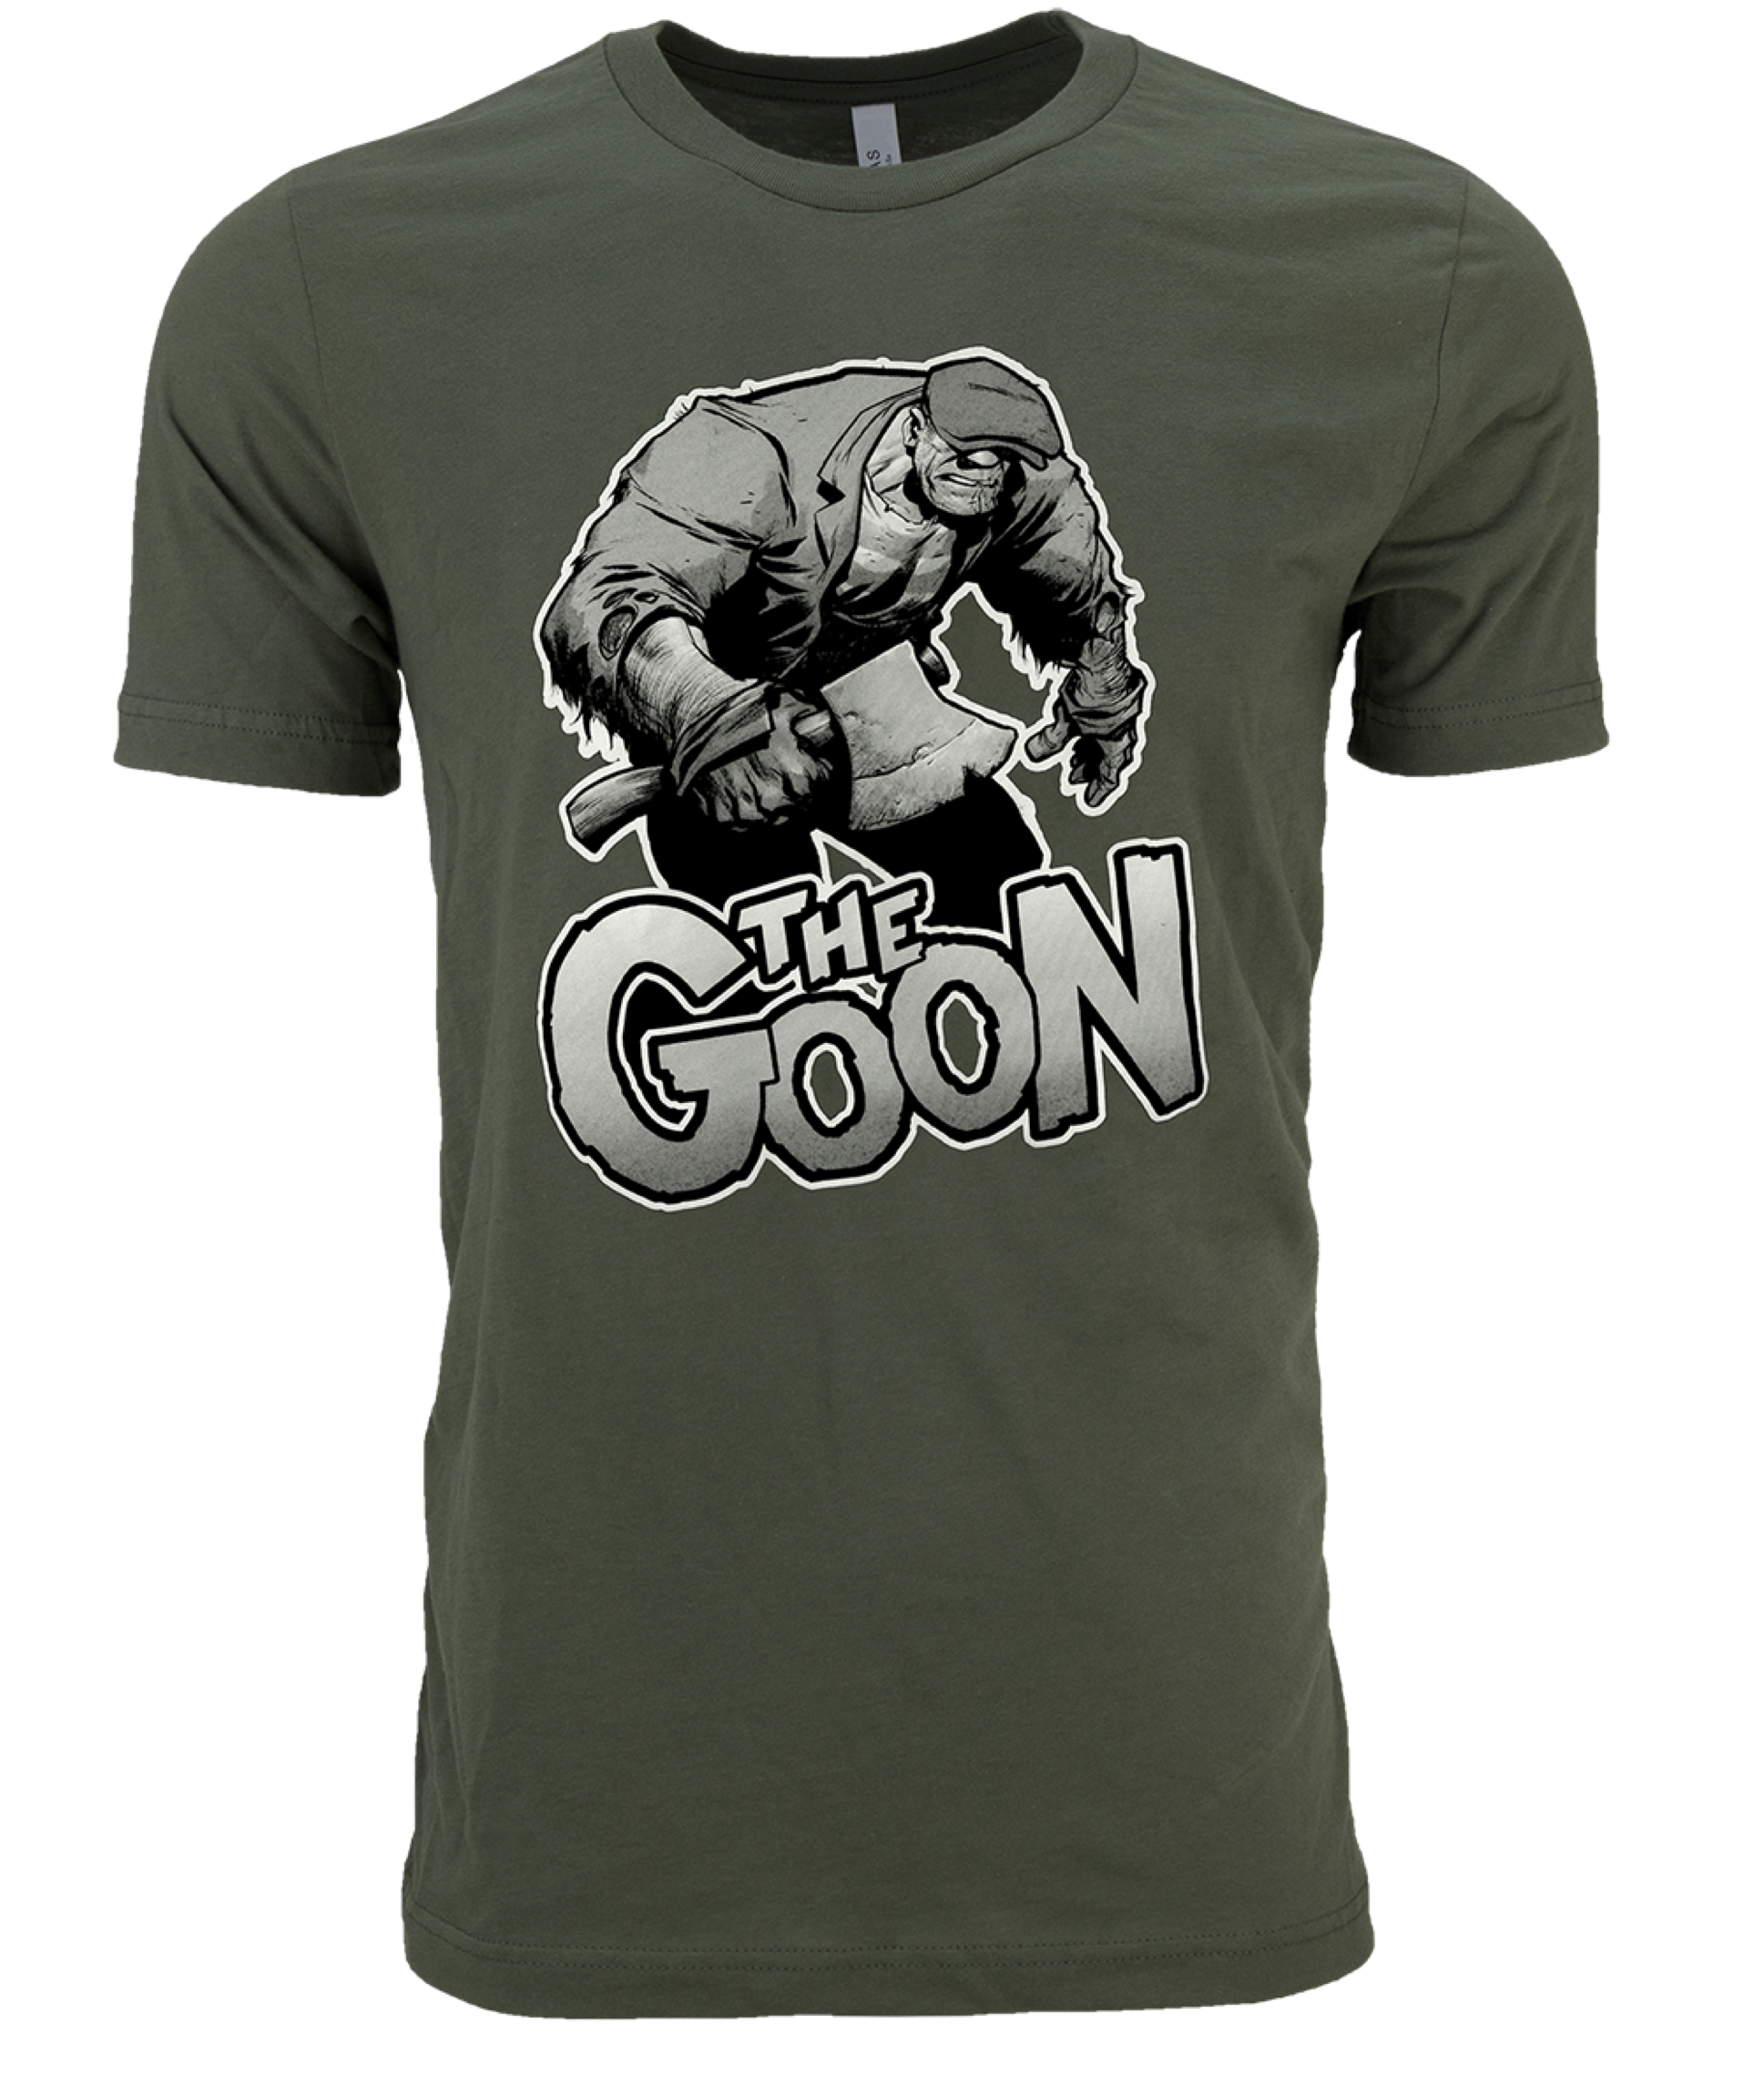 The Goon Tee Shirt